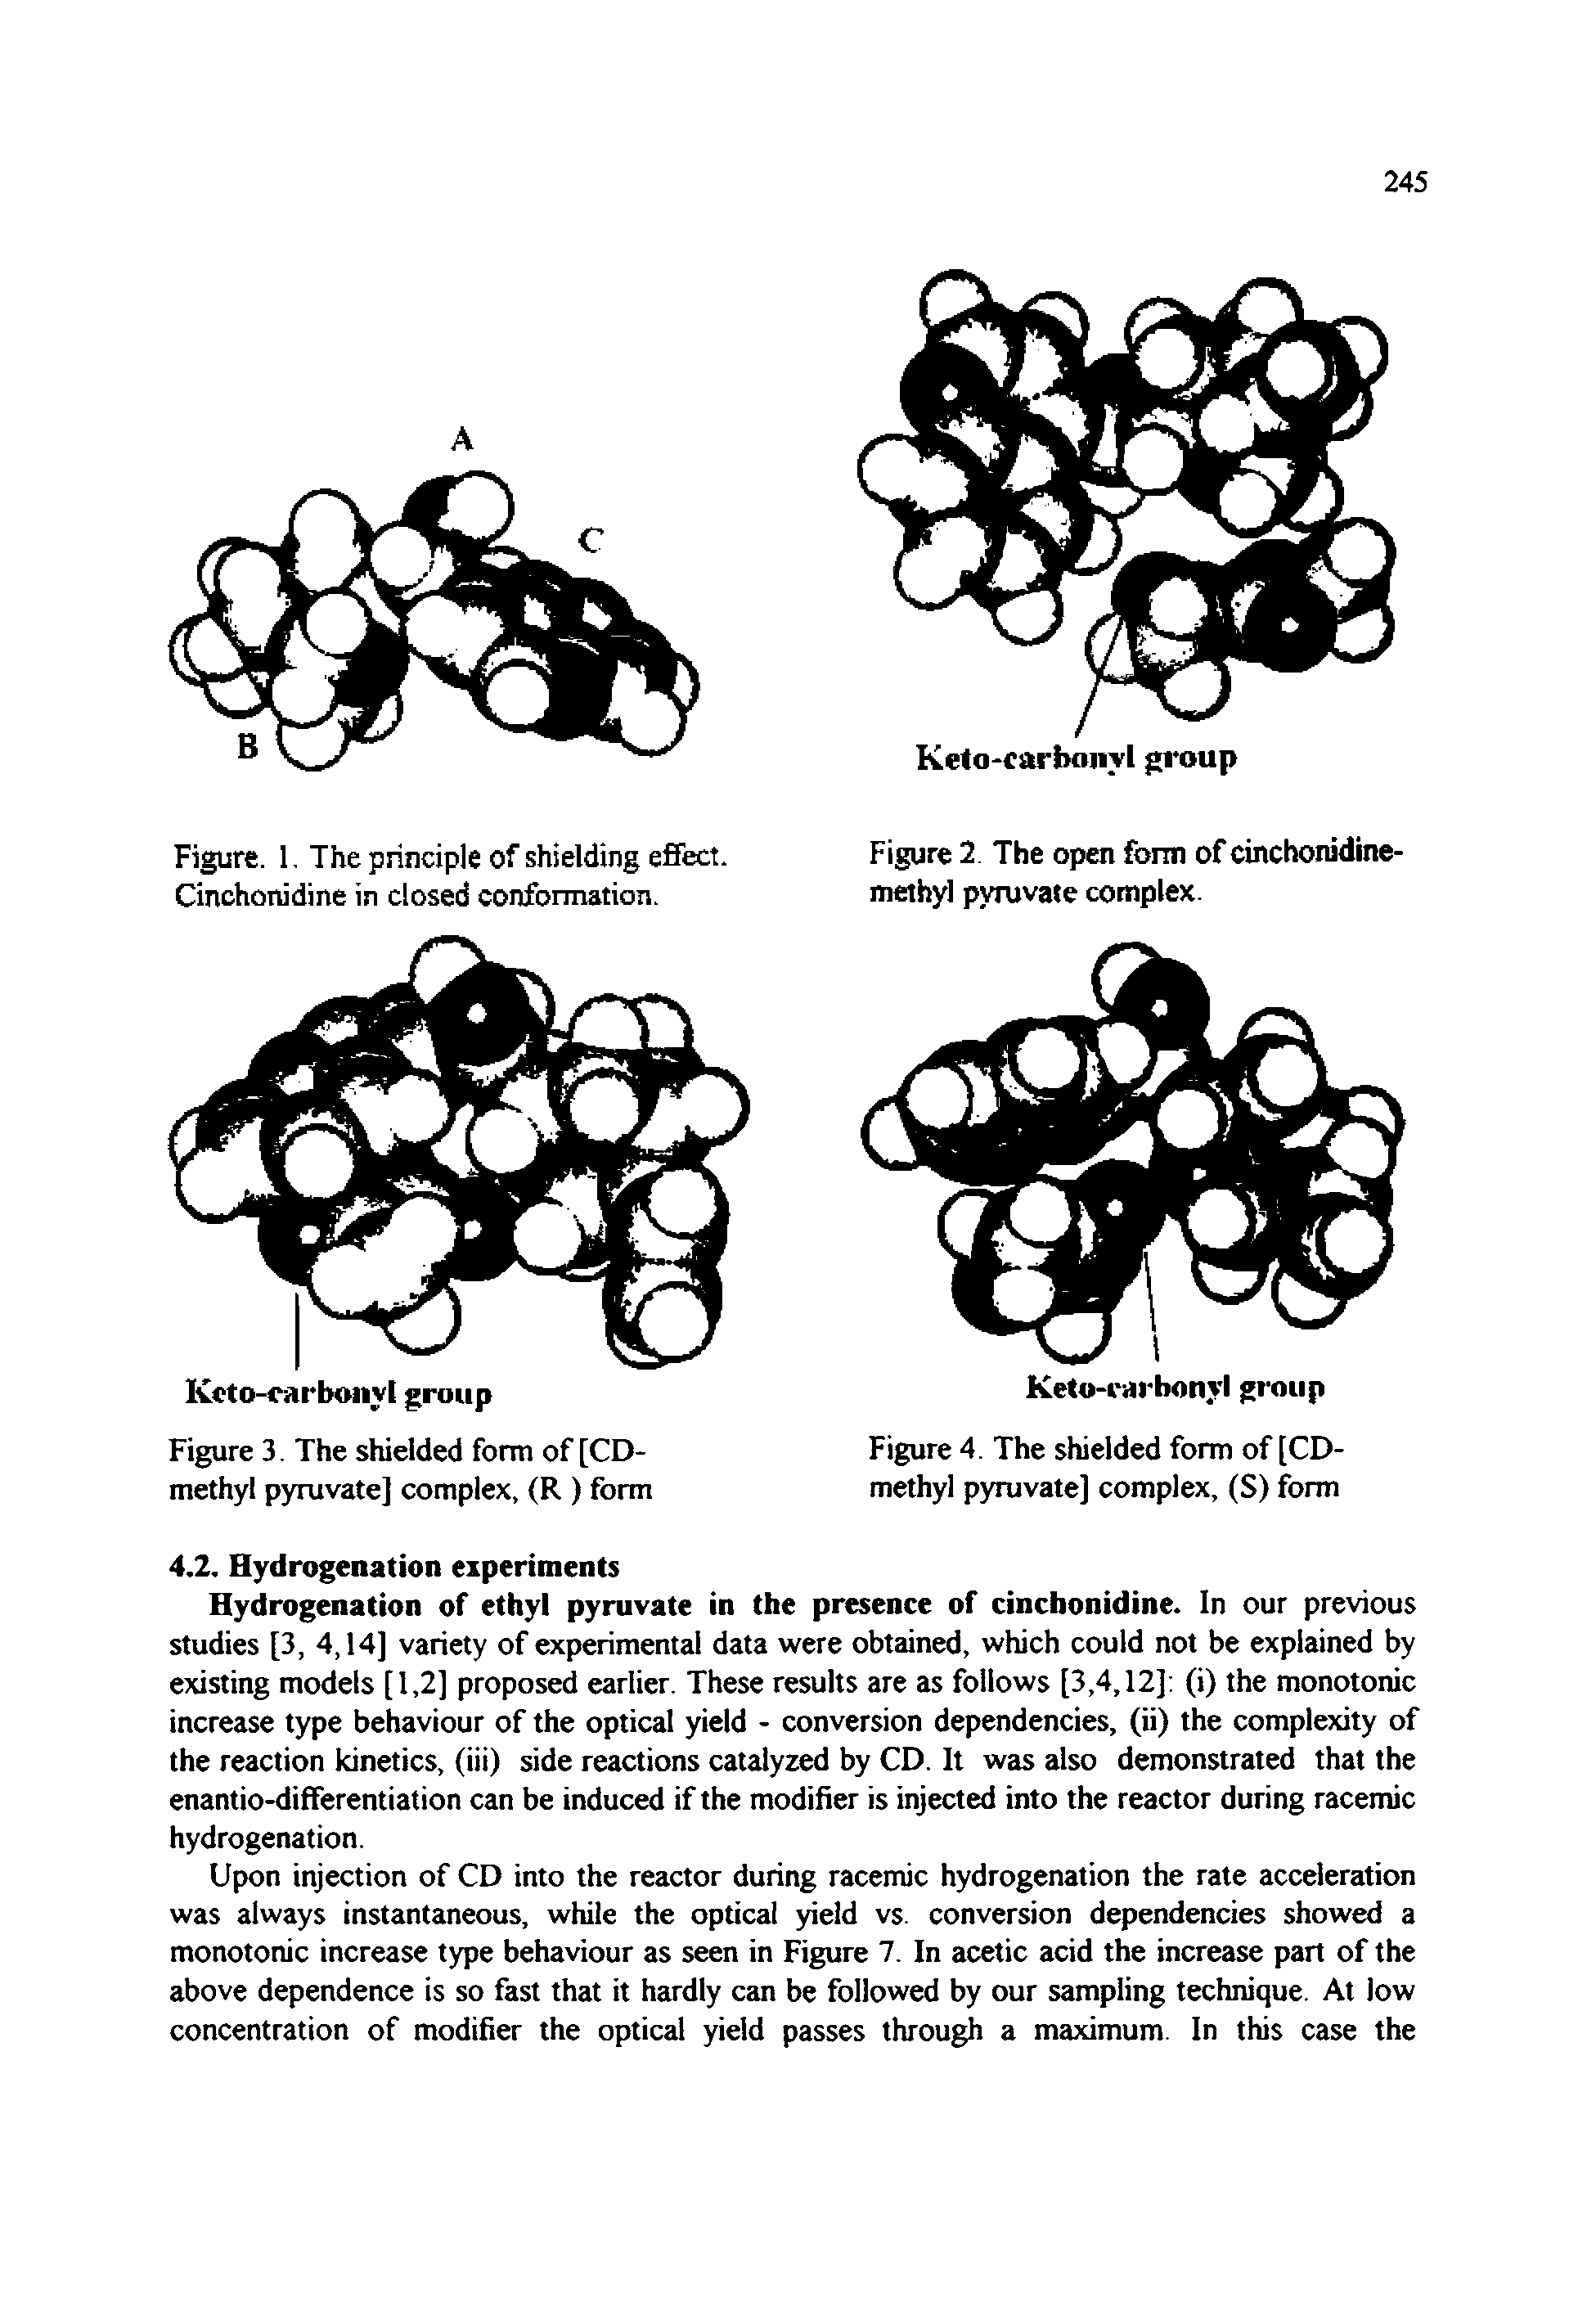 Figure 2 The open fonn of cinchonidine-methyl pyruvate complex.